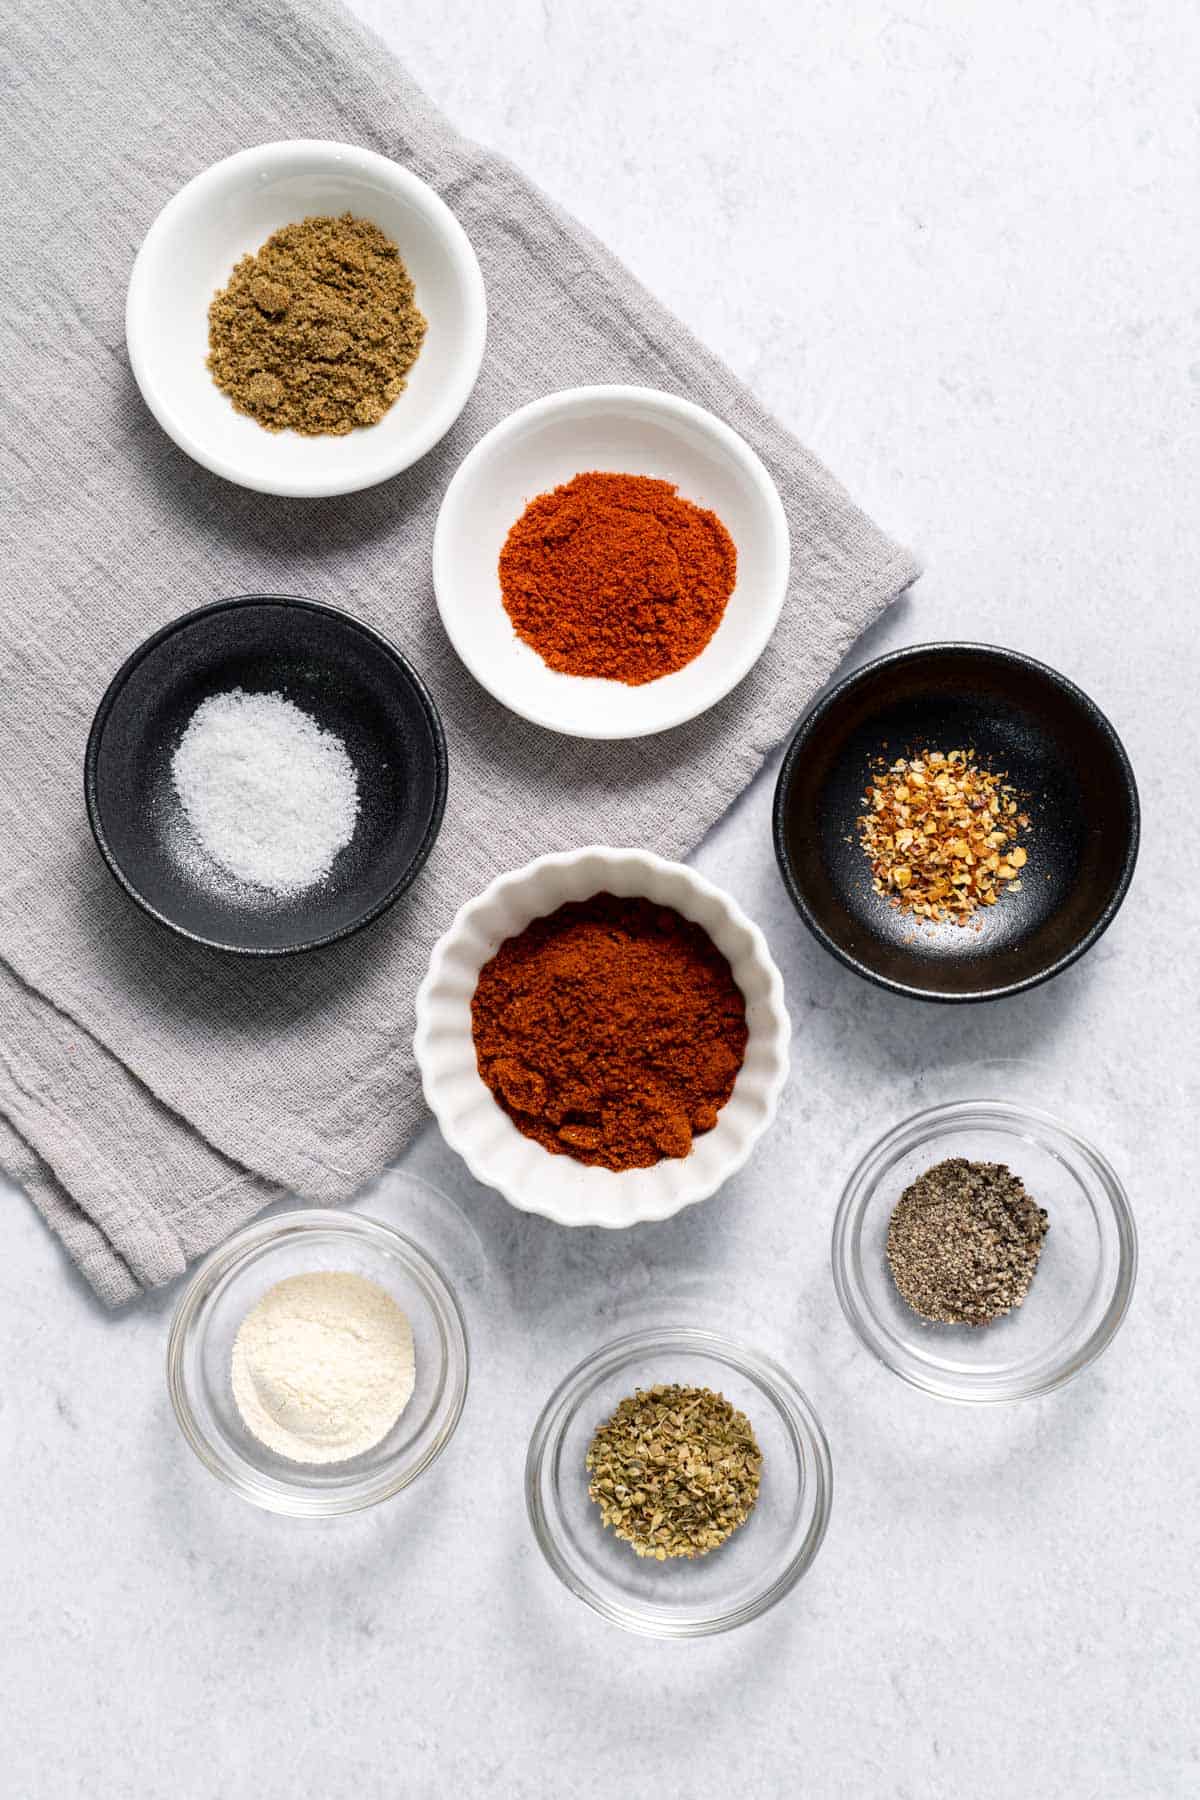 paprika, cumin, chili powder, salt, pepper, chili flakes, oregano in bowls